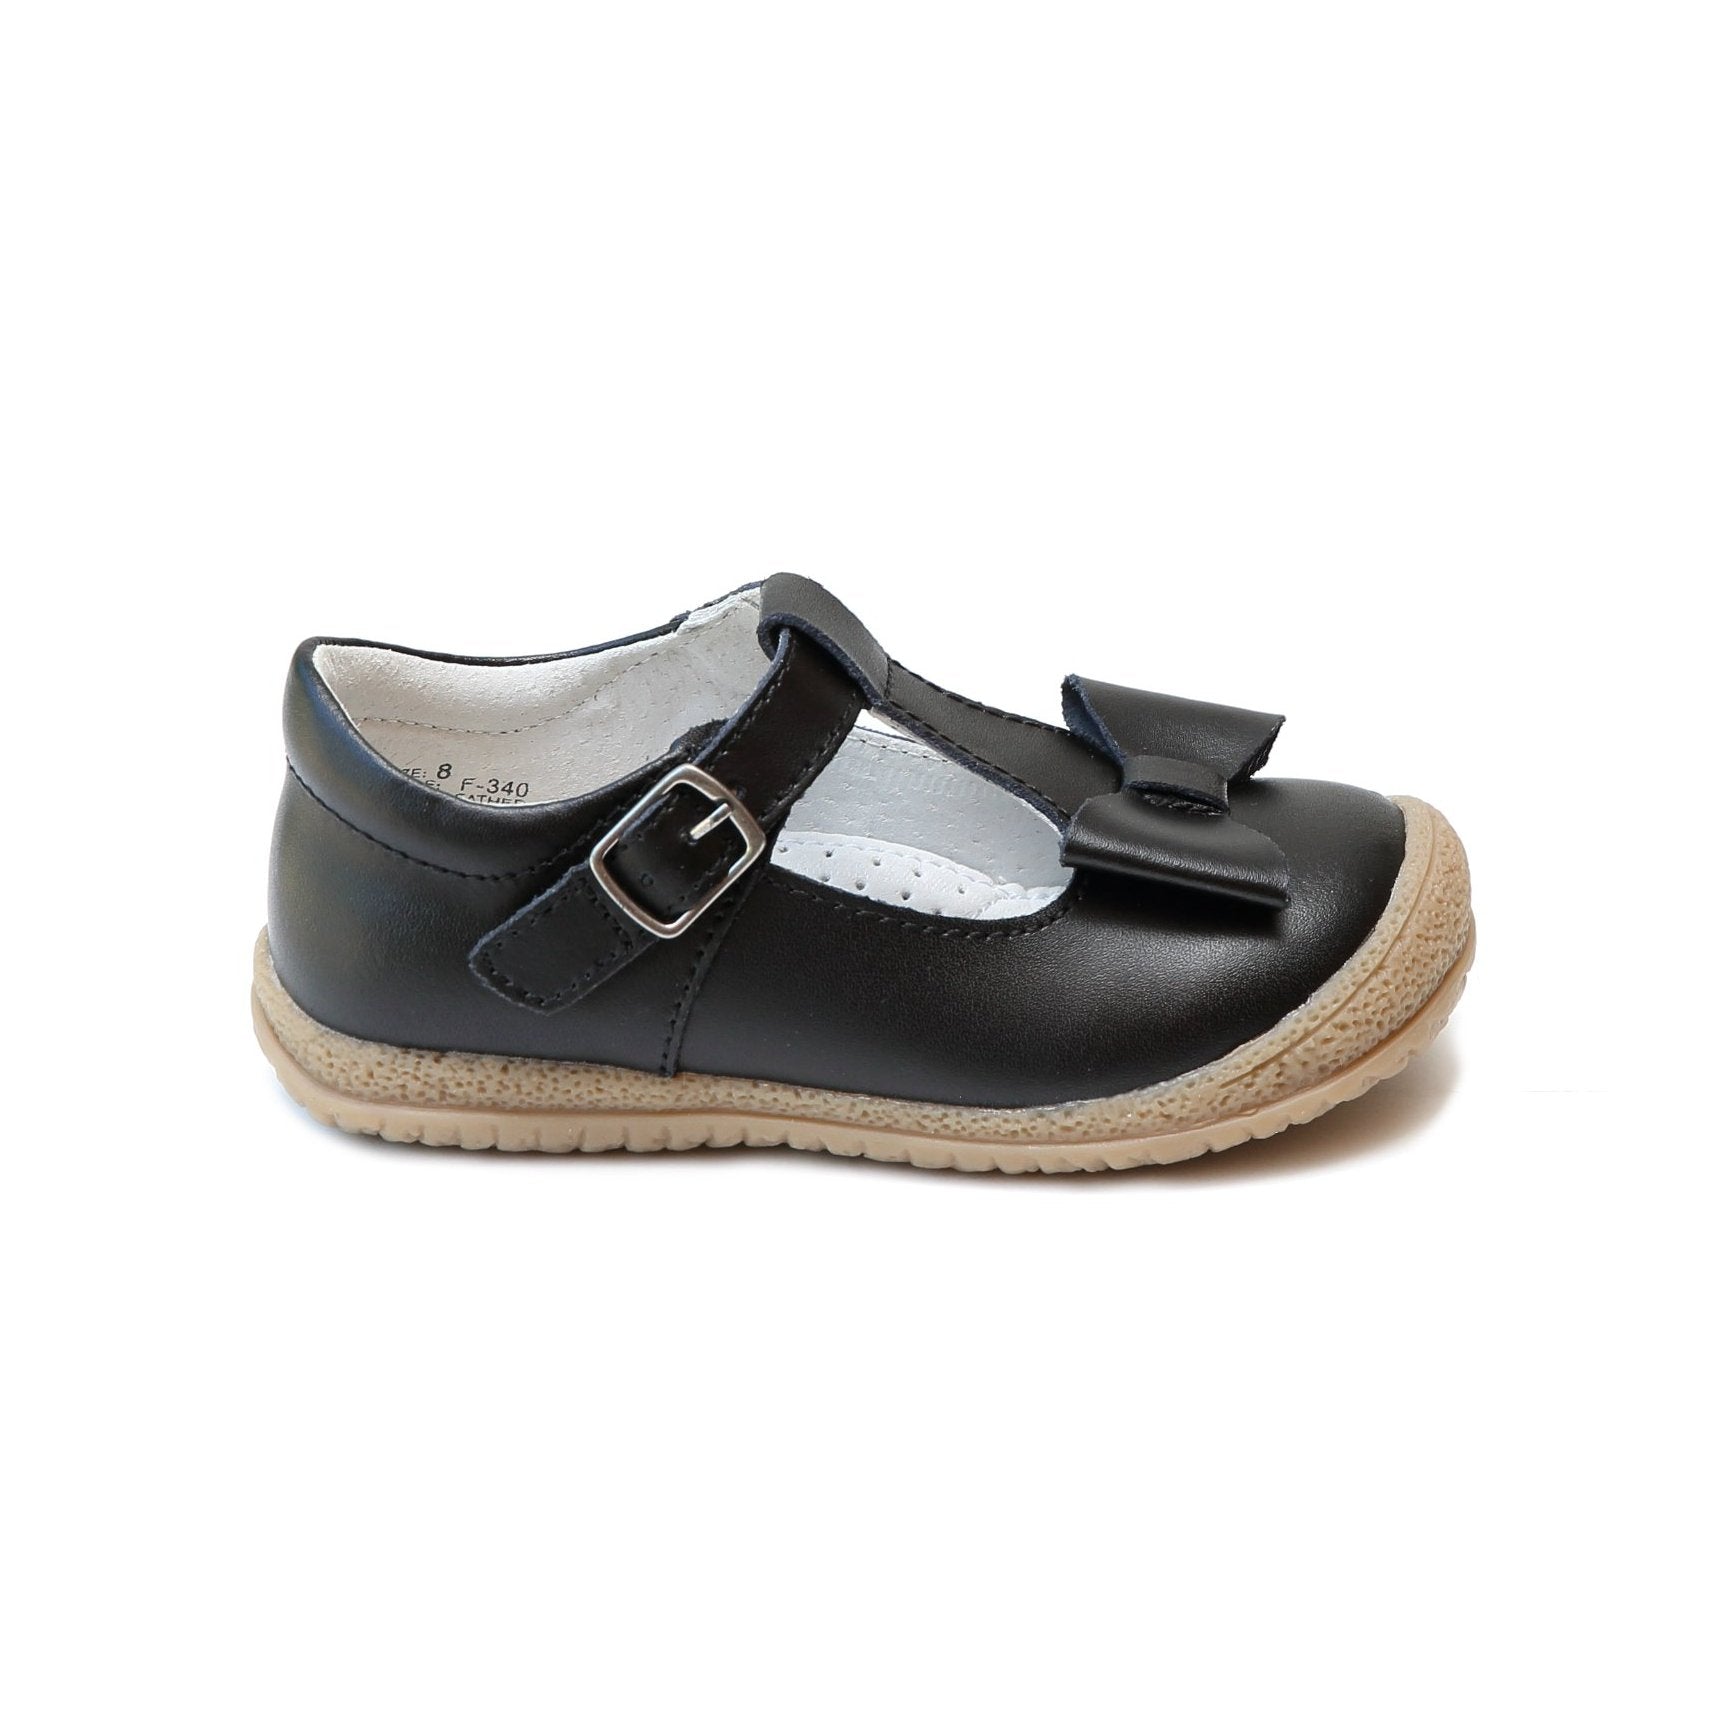 Emma Bow Leather Mary Jane Shoes | F-340 Black